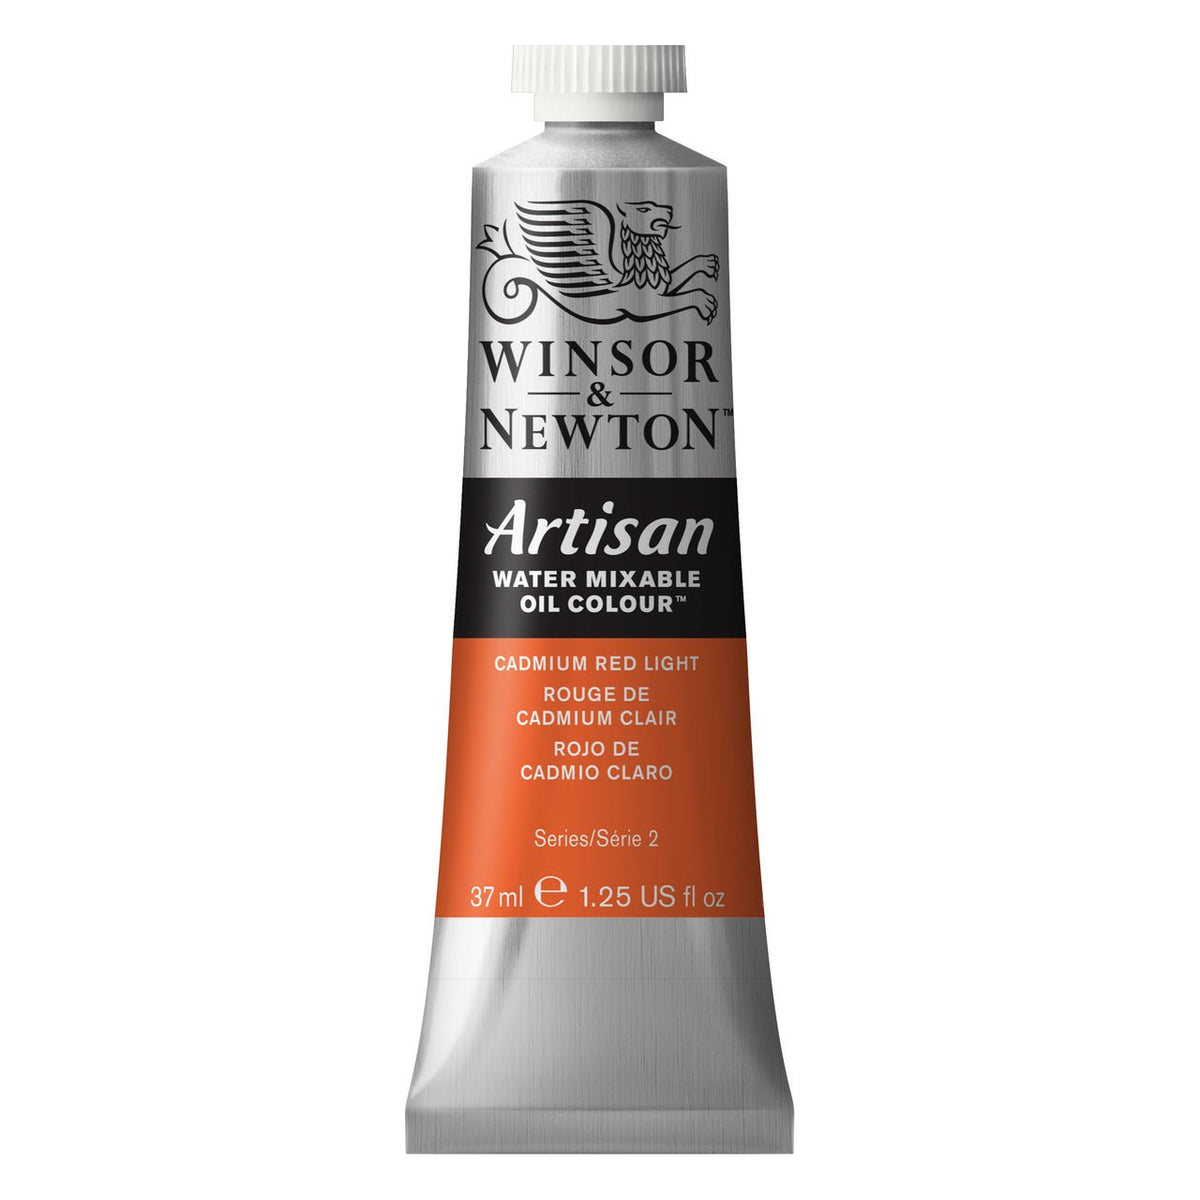 Winsor & Newton Artisan Water Mixable Oil 37ml - Cadmium Red Light - merriartist.com